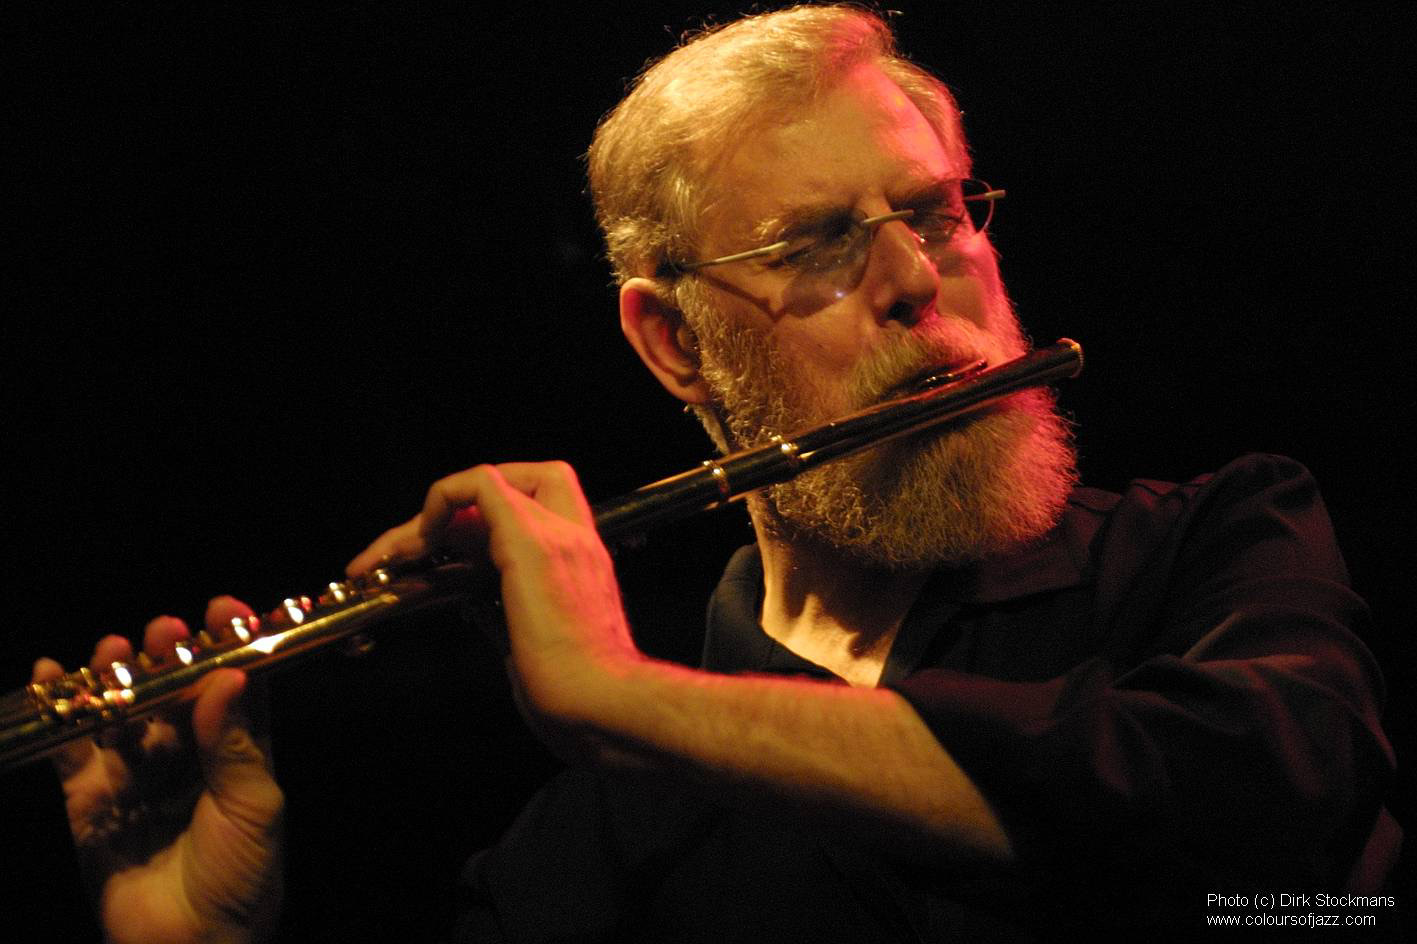 Flute sound. Lew Tabackin. Музыкант флейтист. Музыкант с флейтой. Человек играющий на флейте.